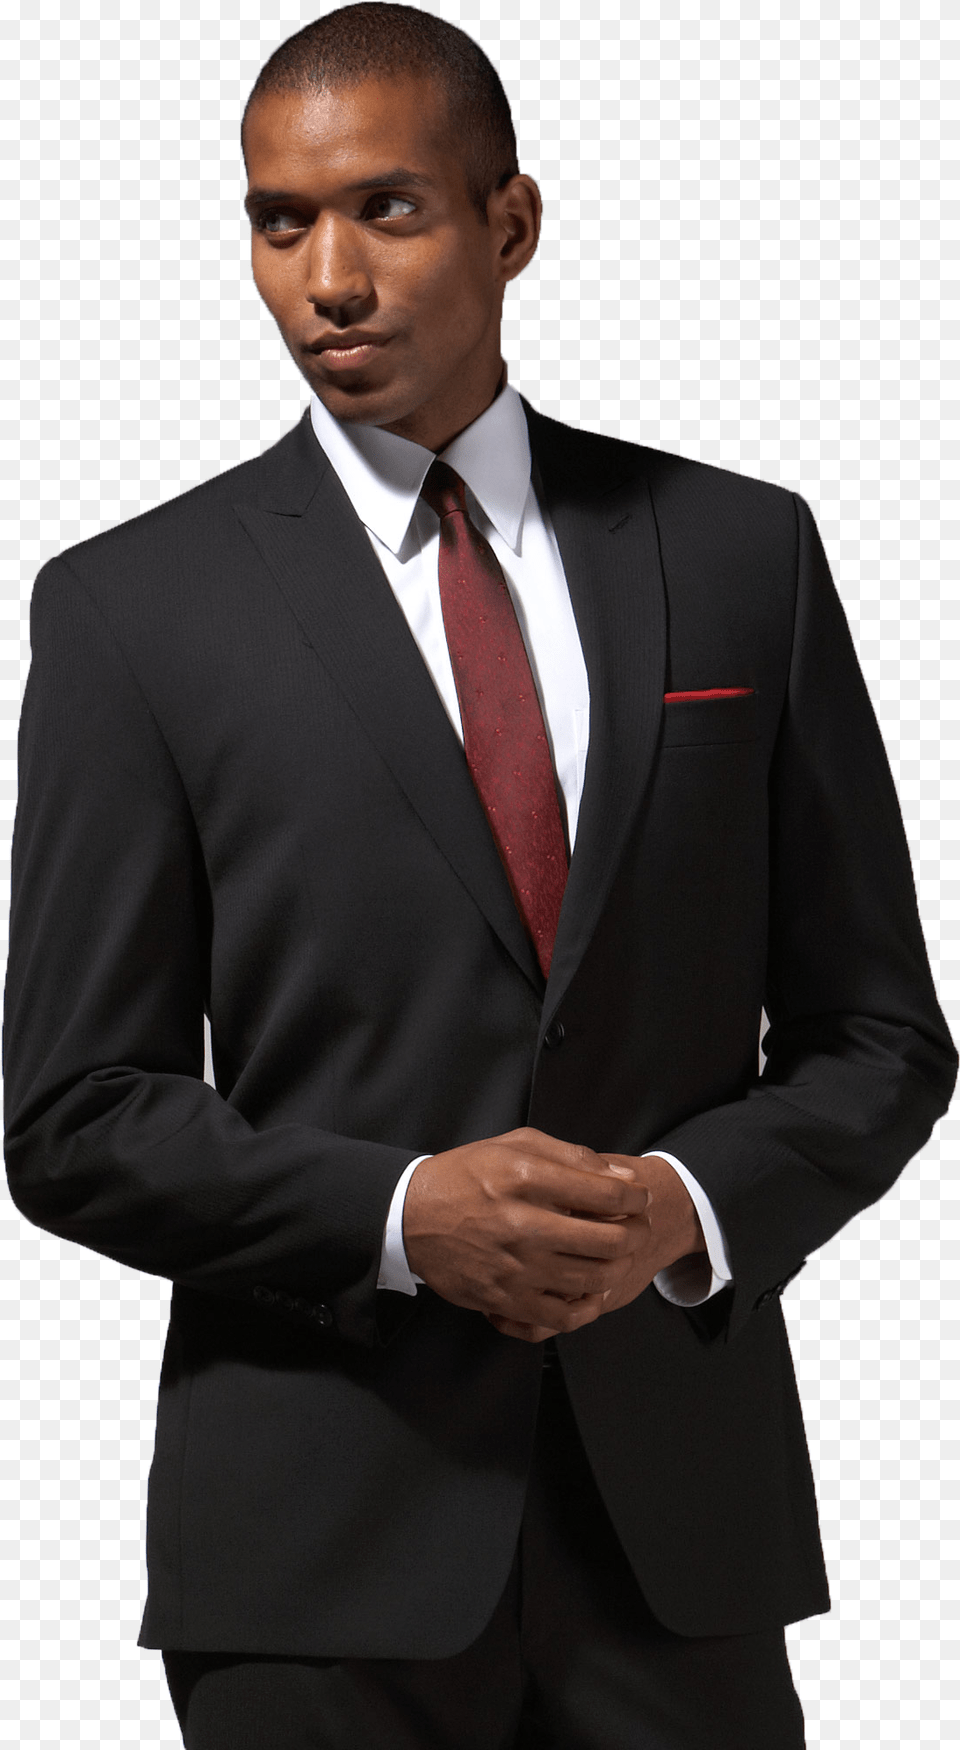 Guy In Suit Dark Suit Cocktail Dress, Accessories, Tie, Tuxedo, Formal Wear Png